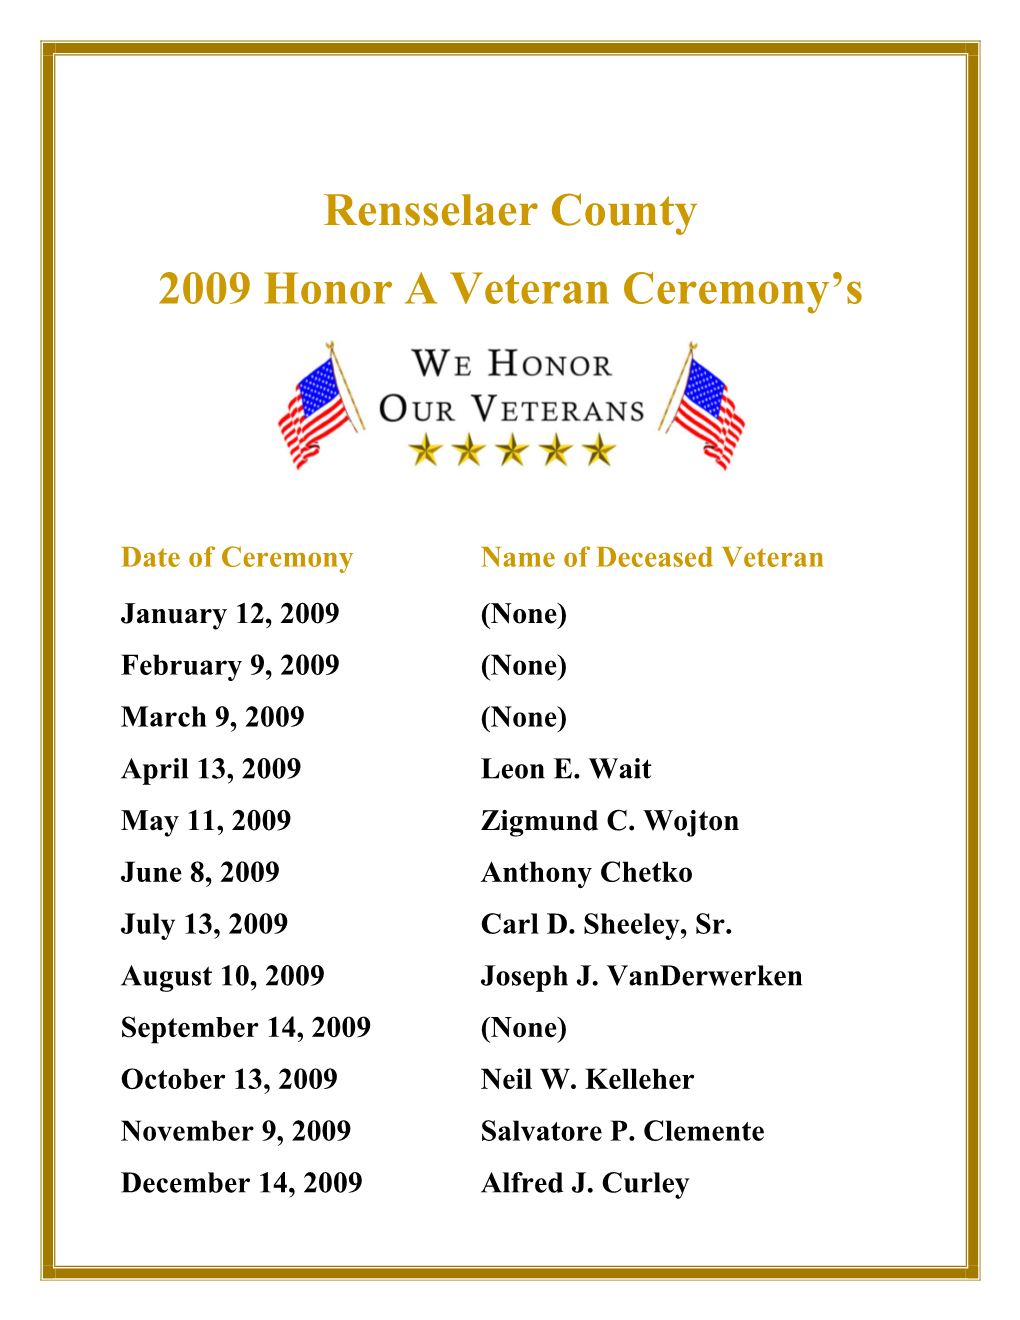 Rensselaer County 2009 Honor a Veteran Ceremony's